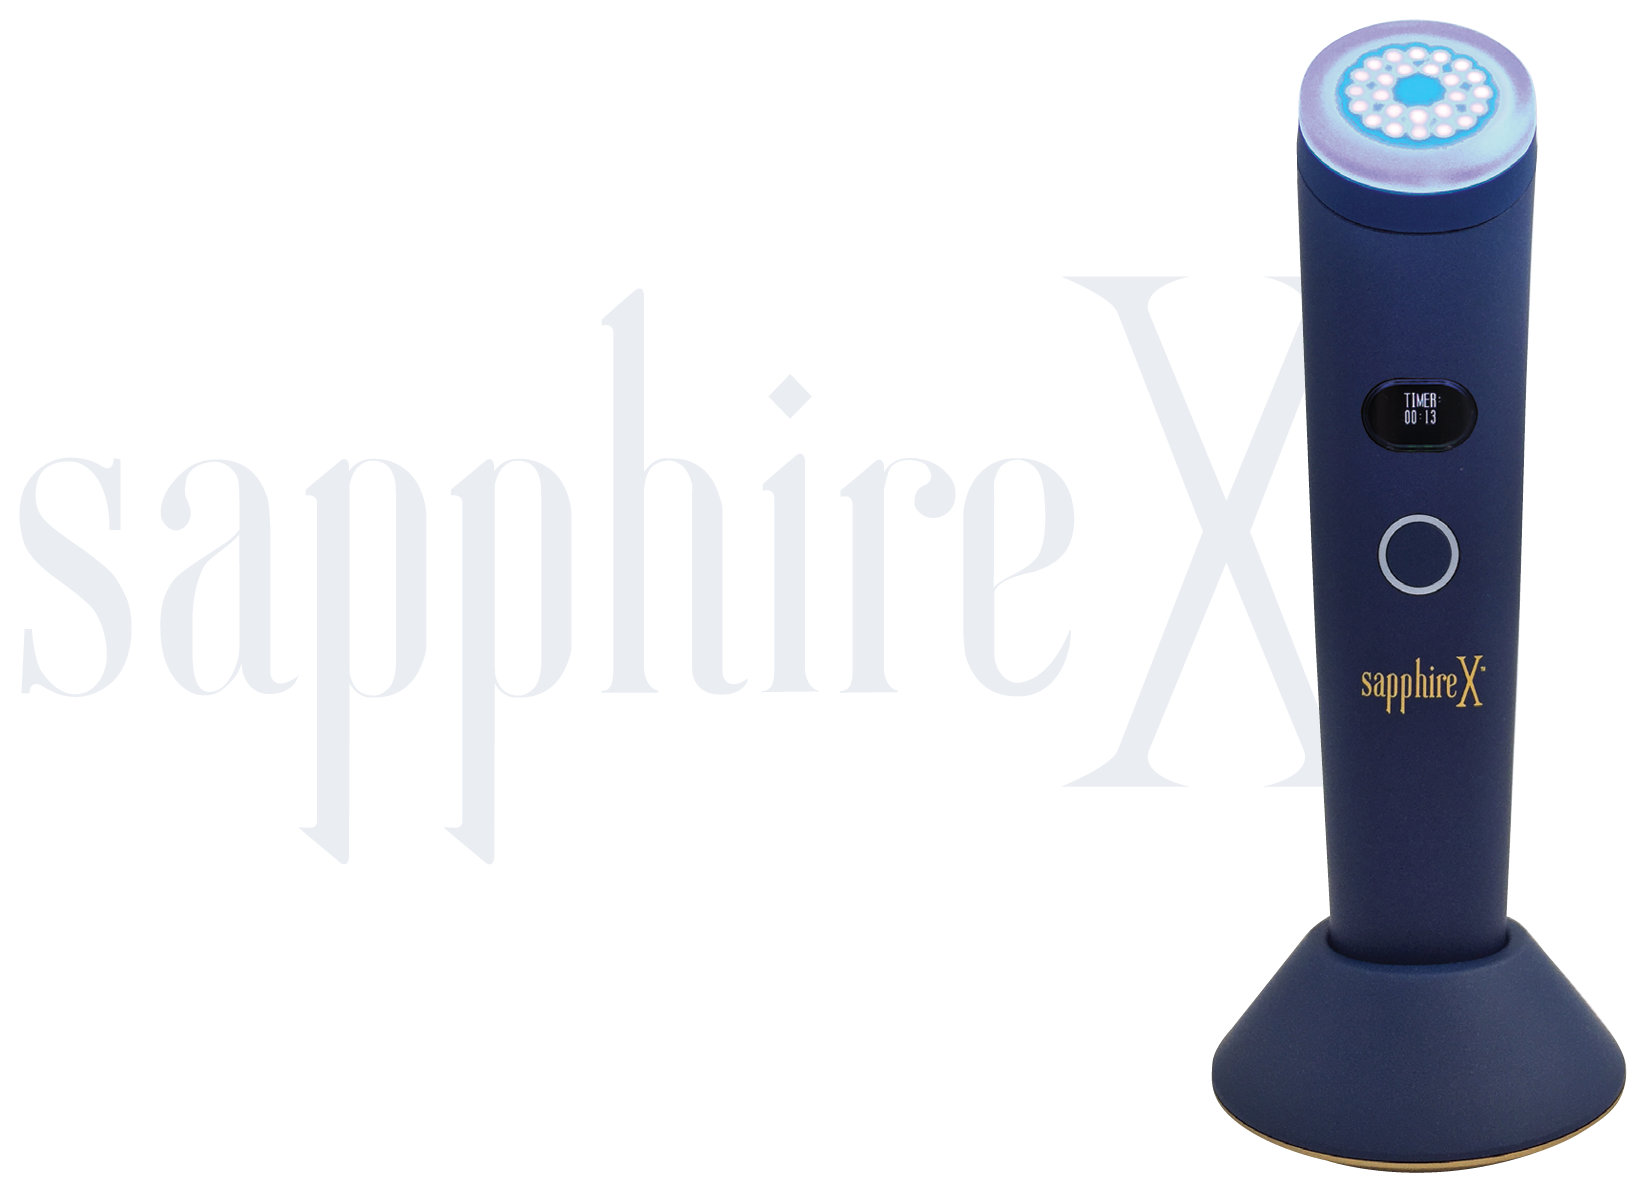 Sapphire X Clinical Study